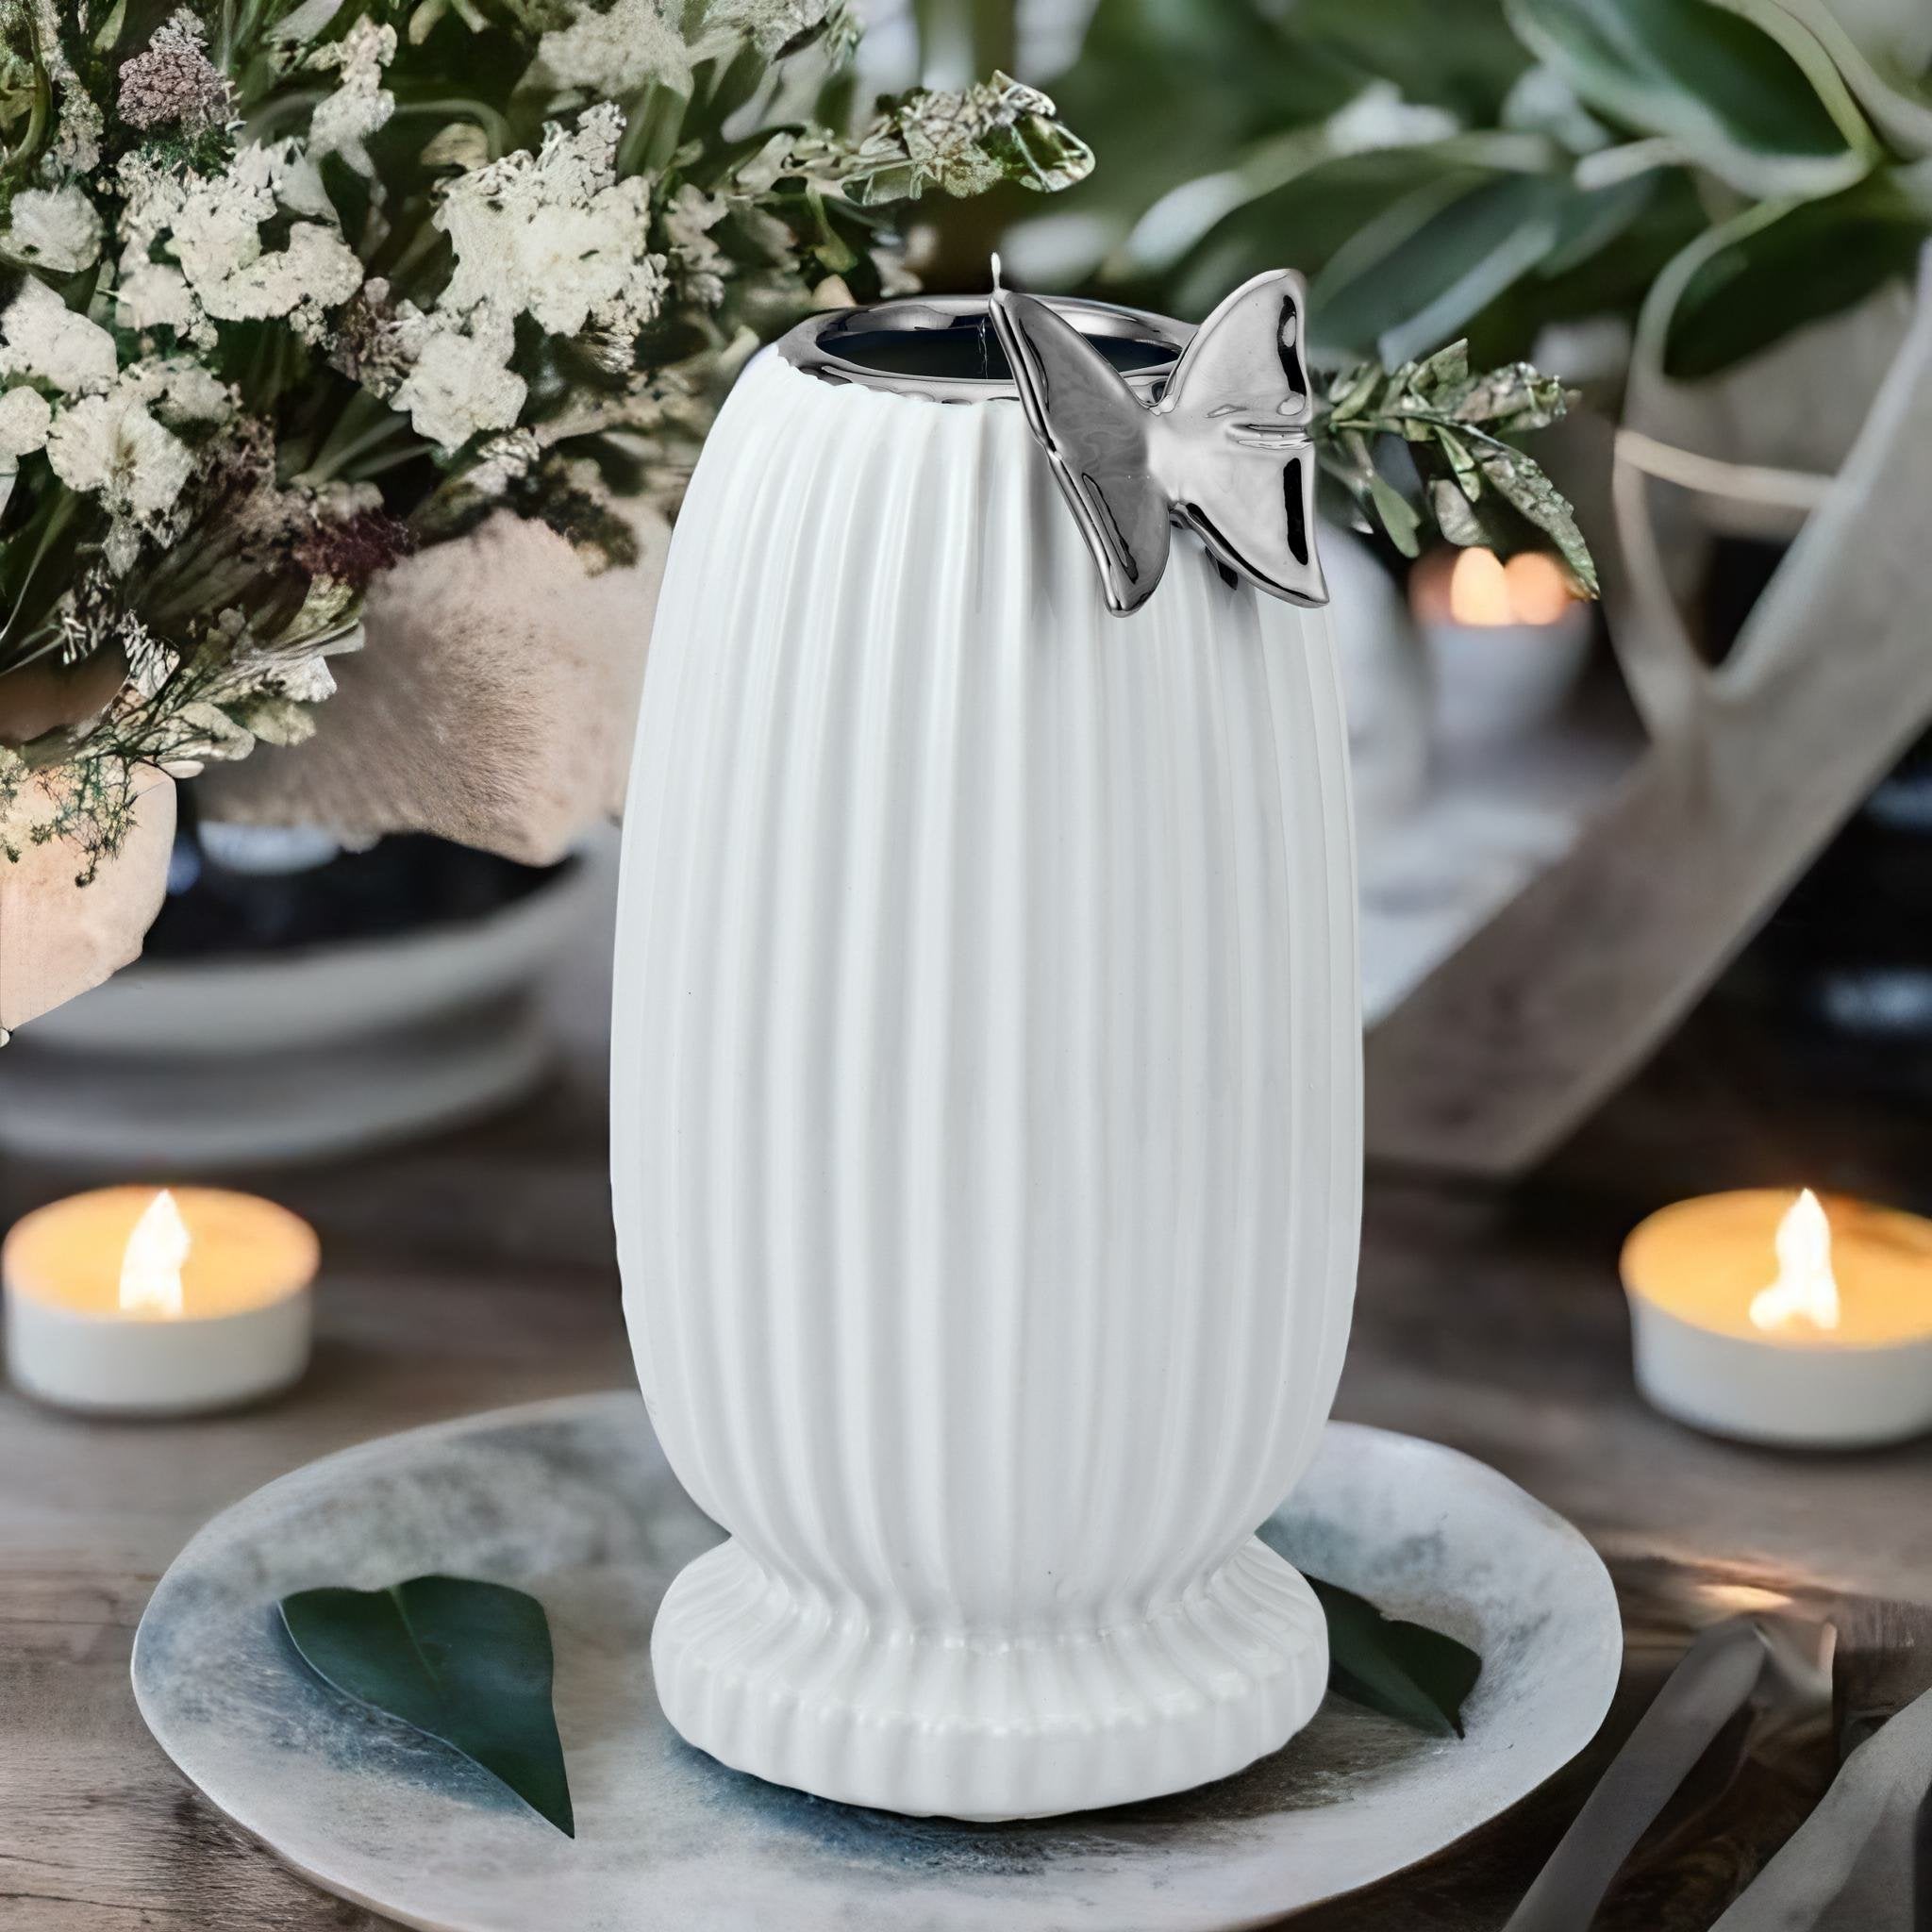 Butterfly Tumbler Ceramic Vase (White & Silver)